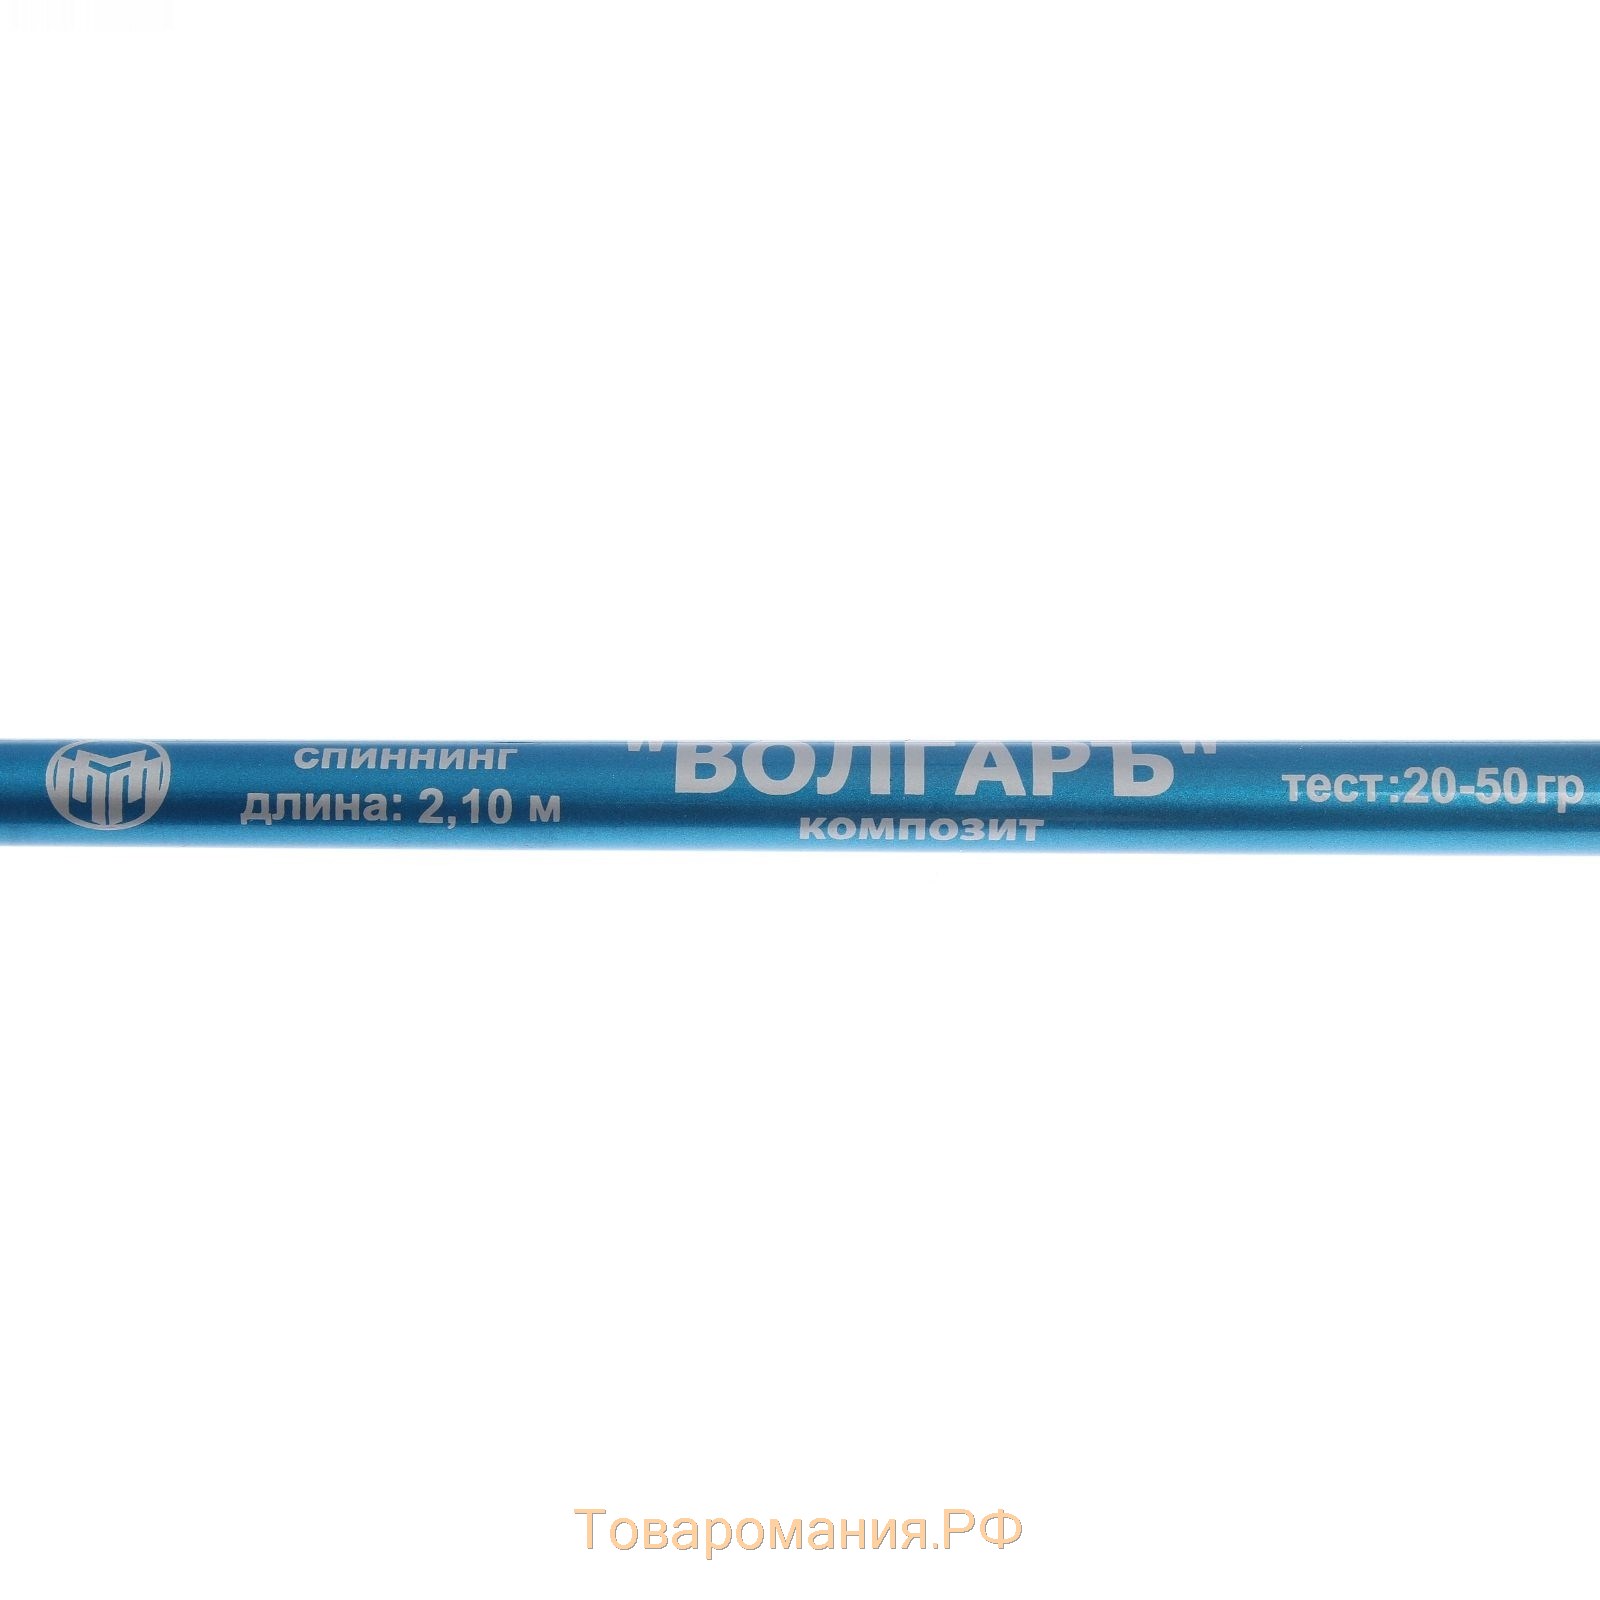 Спиннинг "Волгаръ", тест 20-50 г, длина 2.1 м